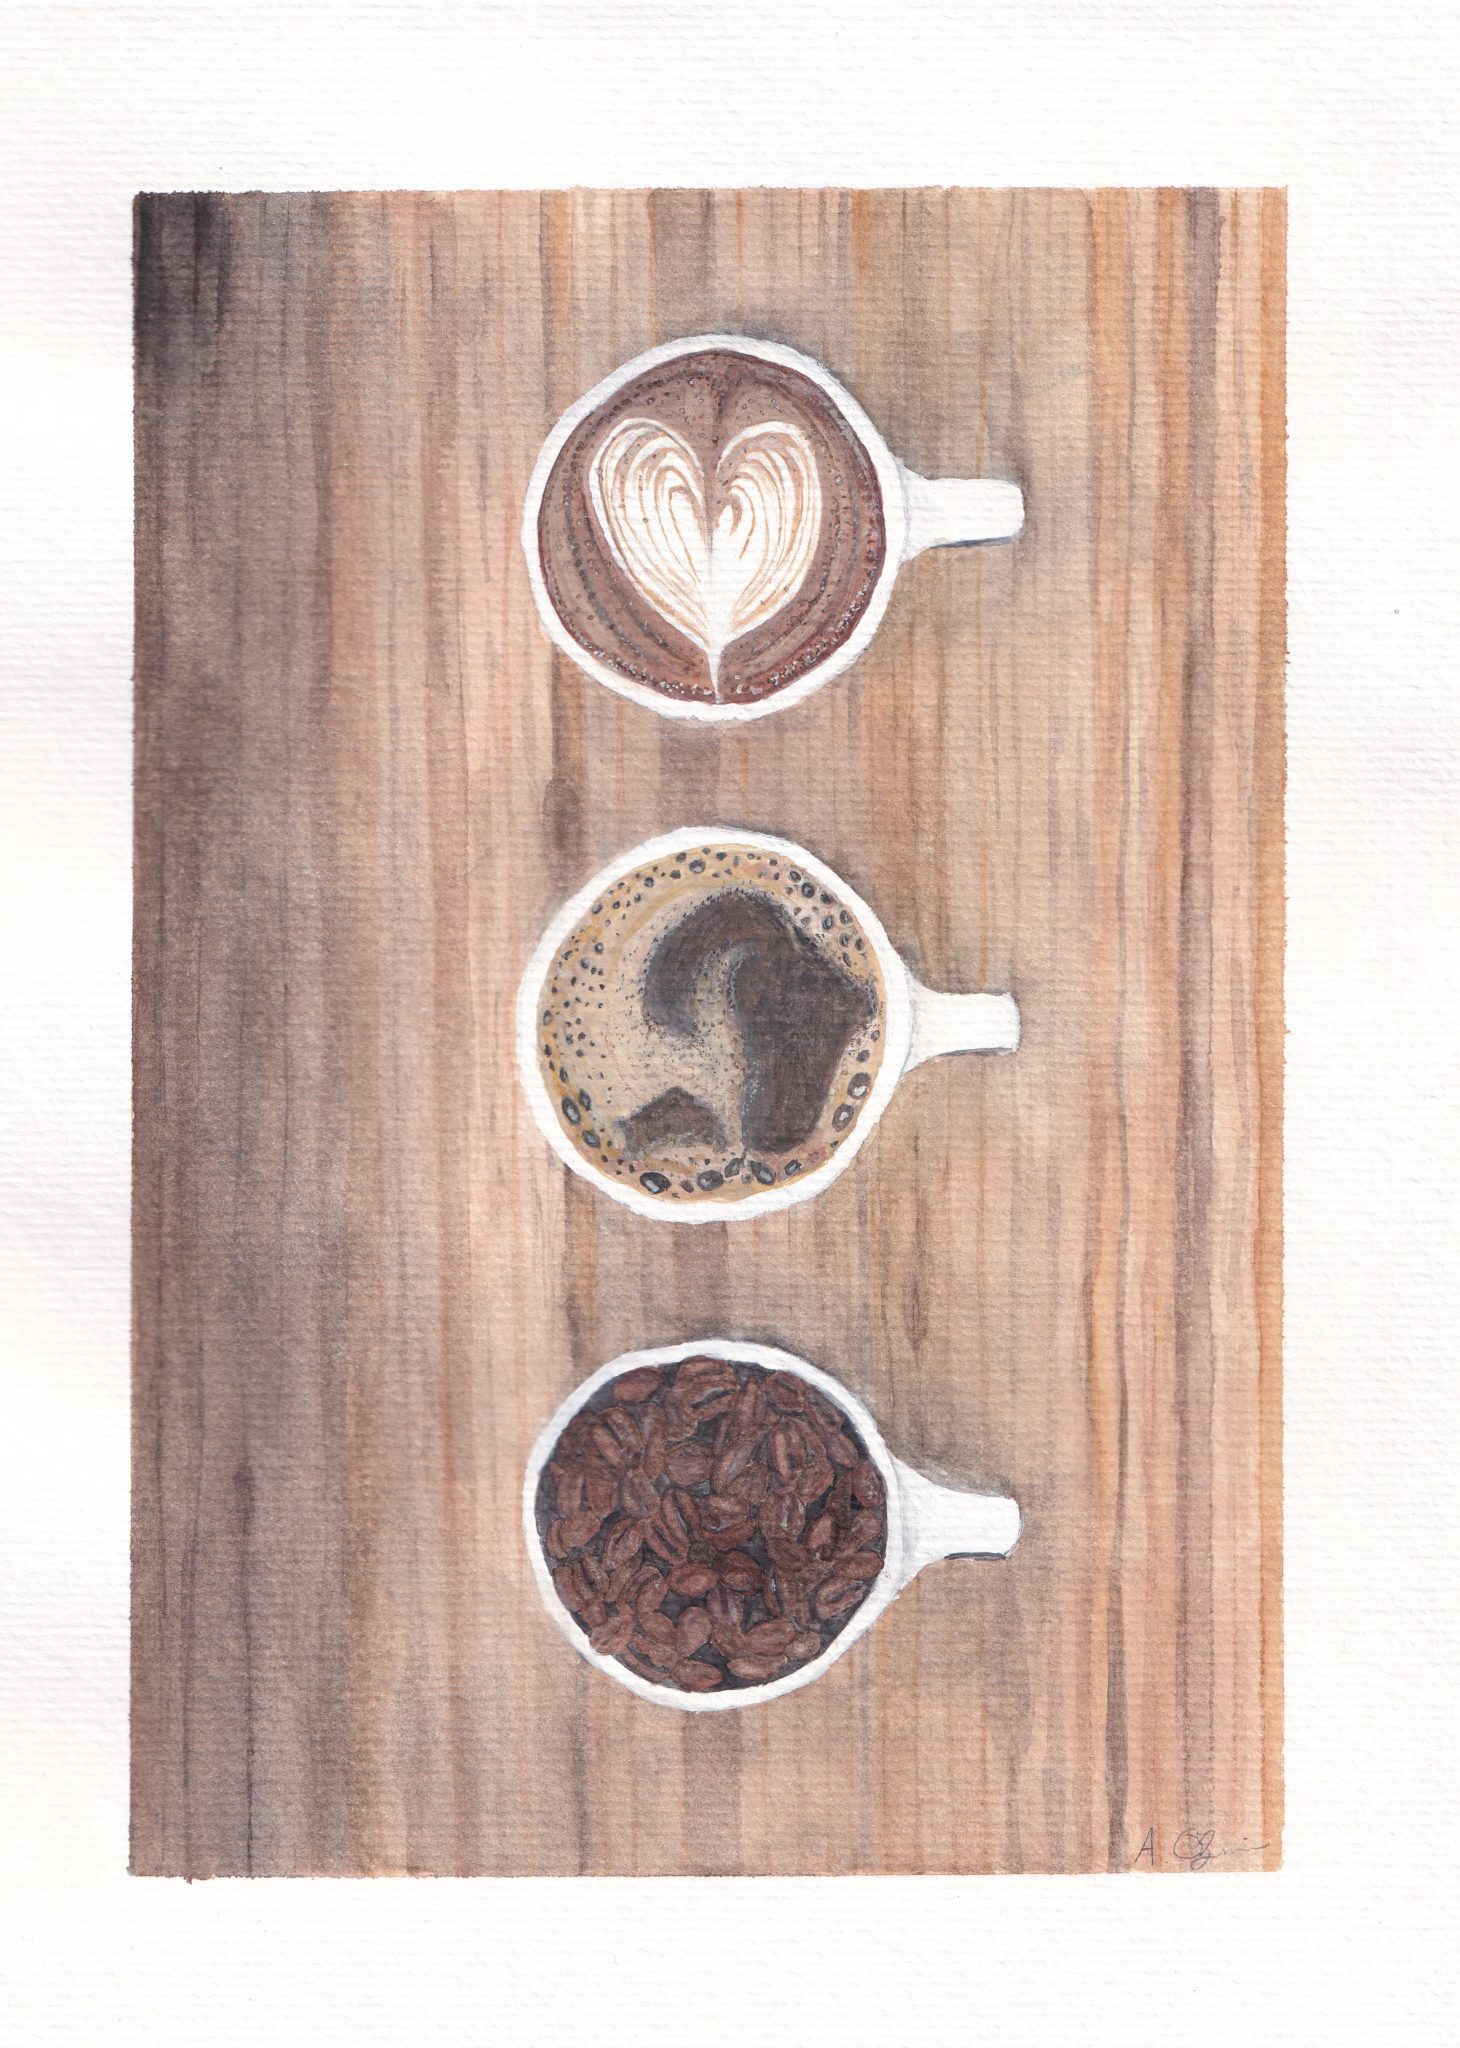 Malerei cafe kaffee im tasse espresso cappuccino Bakerei Lebensmittel Essen Kunst aquarell Kunst Rems Murr Kreis Sulzbach an der Murr Alice Obermeier Kunstdrucke Deustchlalnd